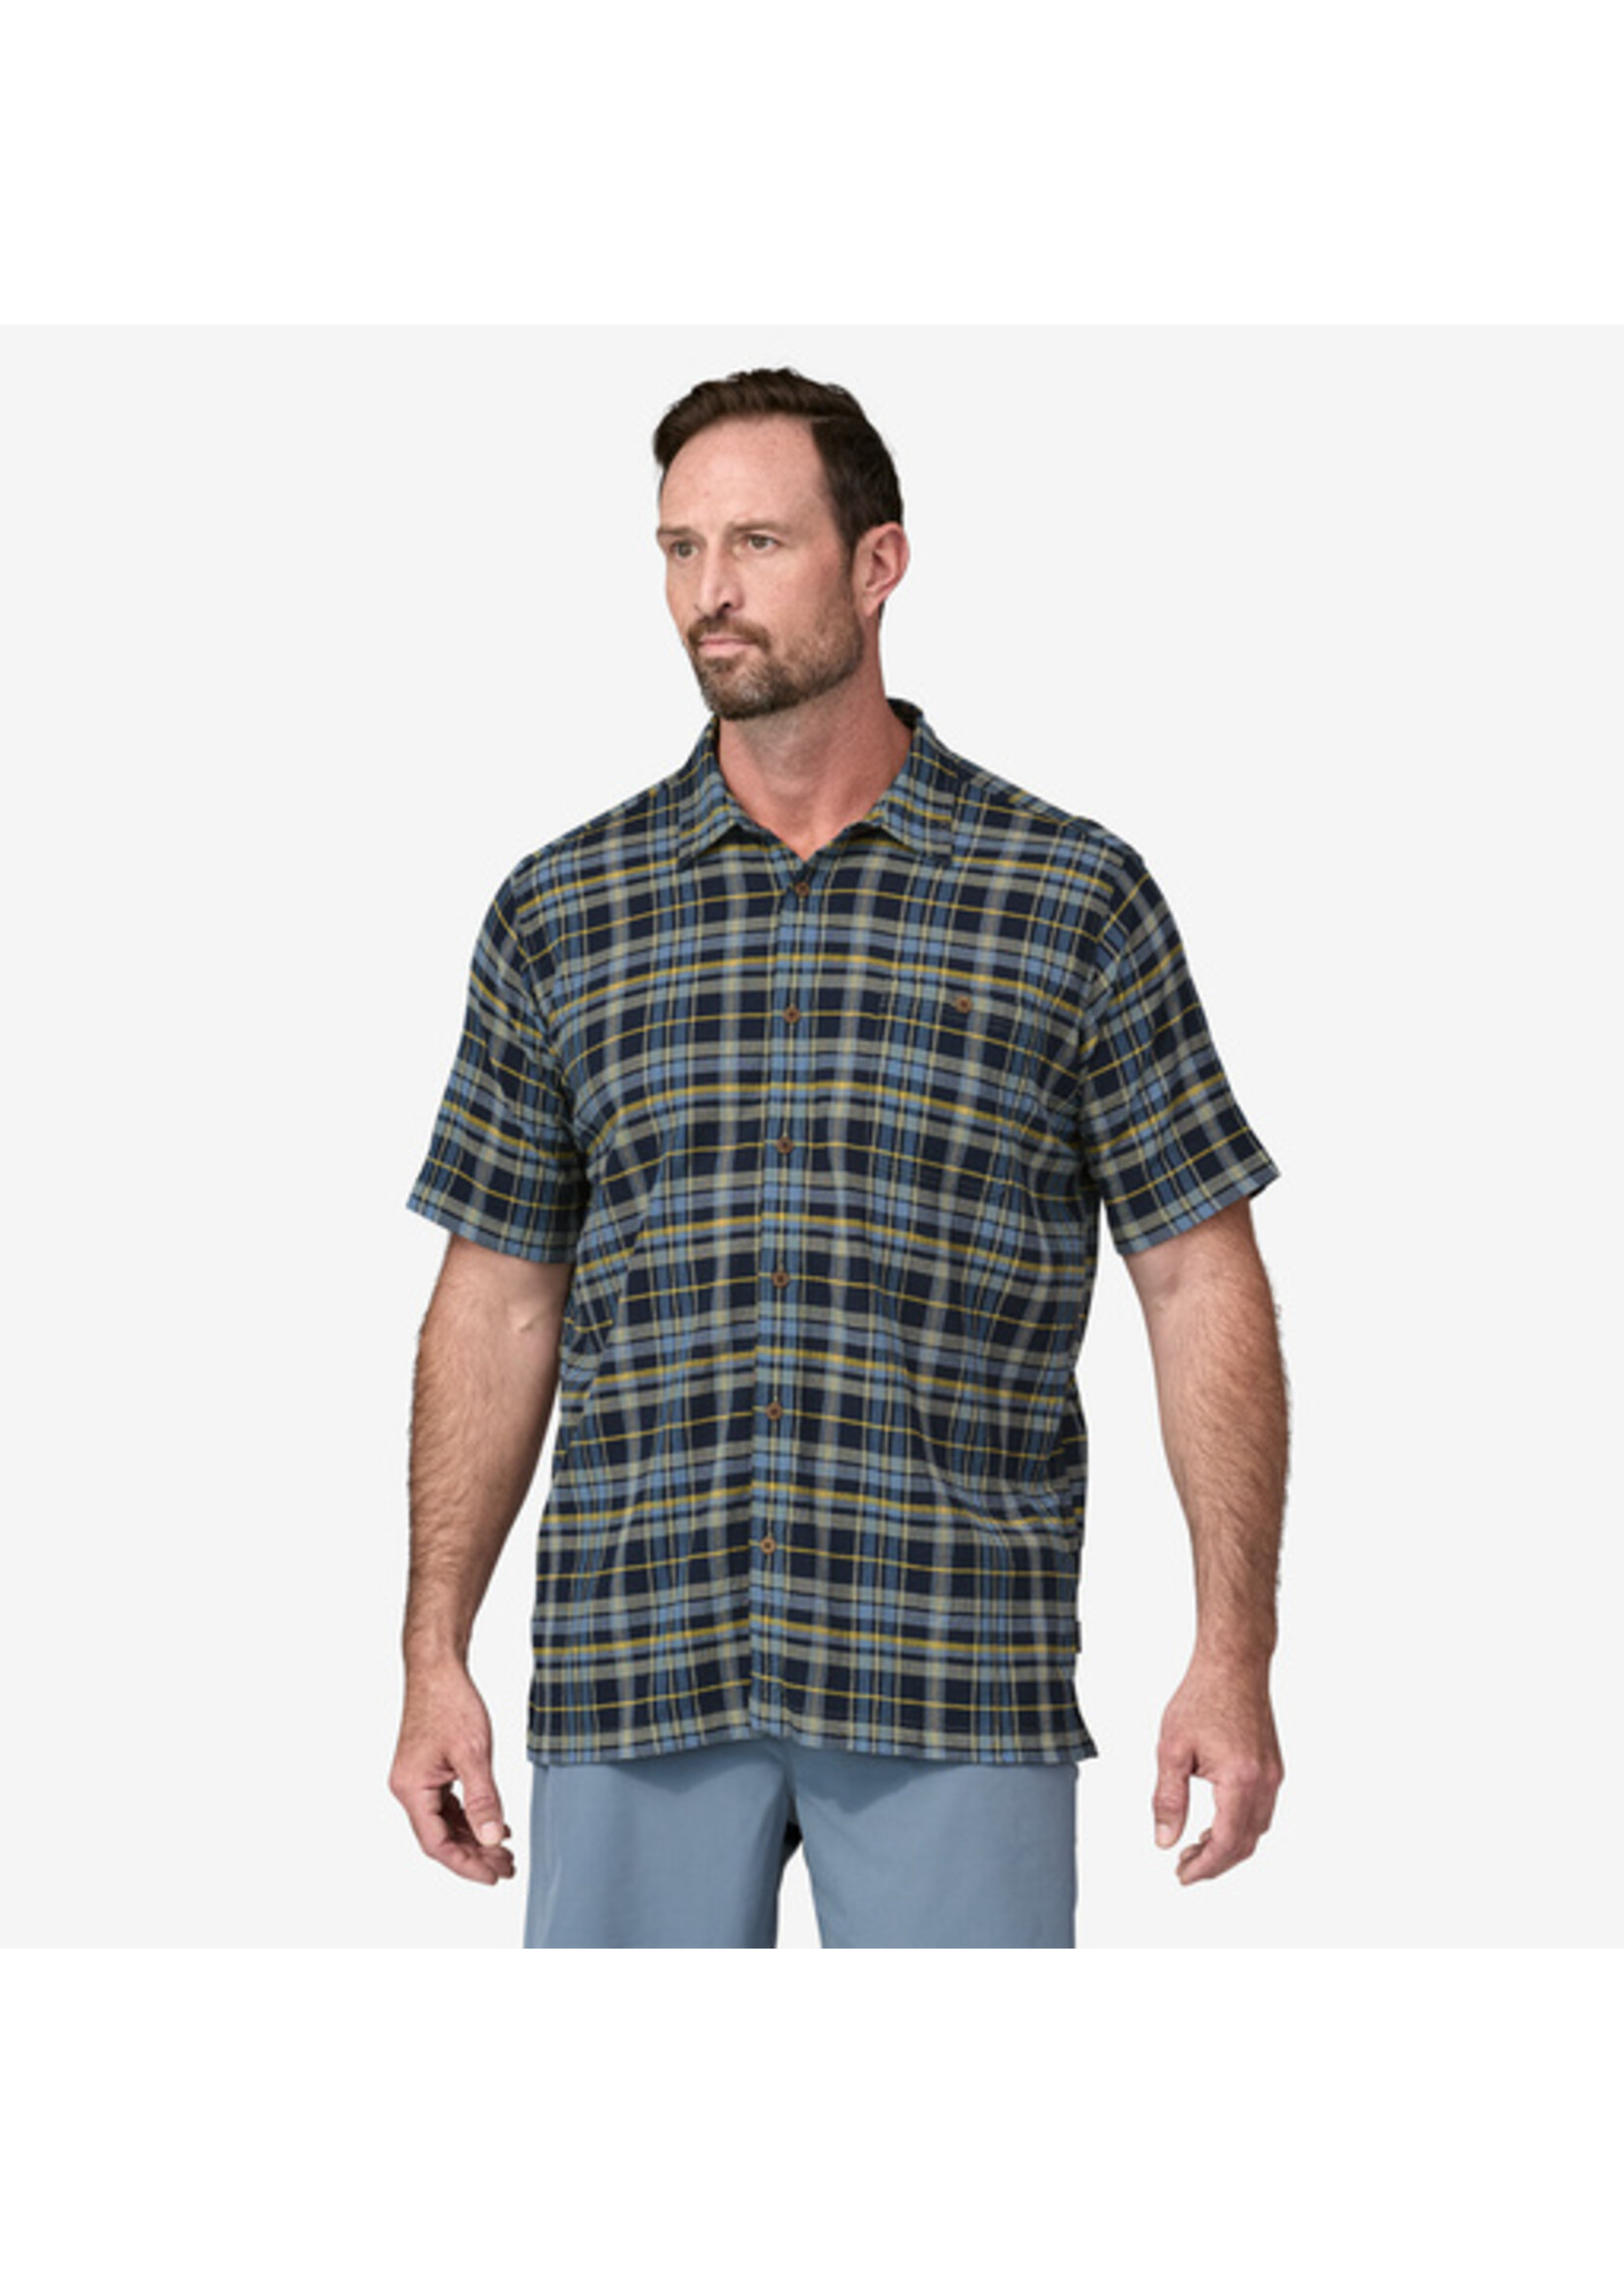 Patagonia Men's A/C Button Up Shirt - Paint Plaid: Tidepool Blue